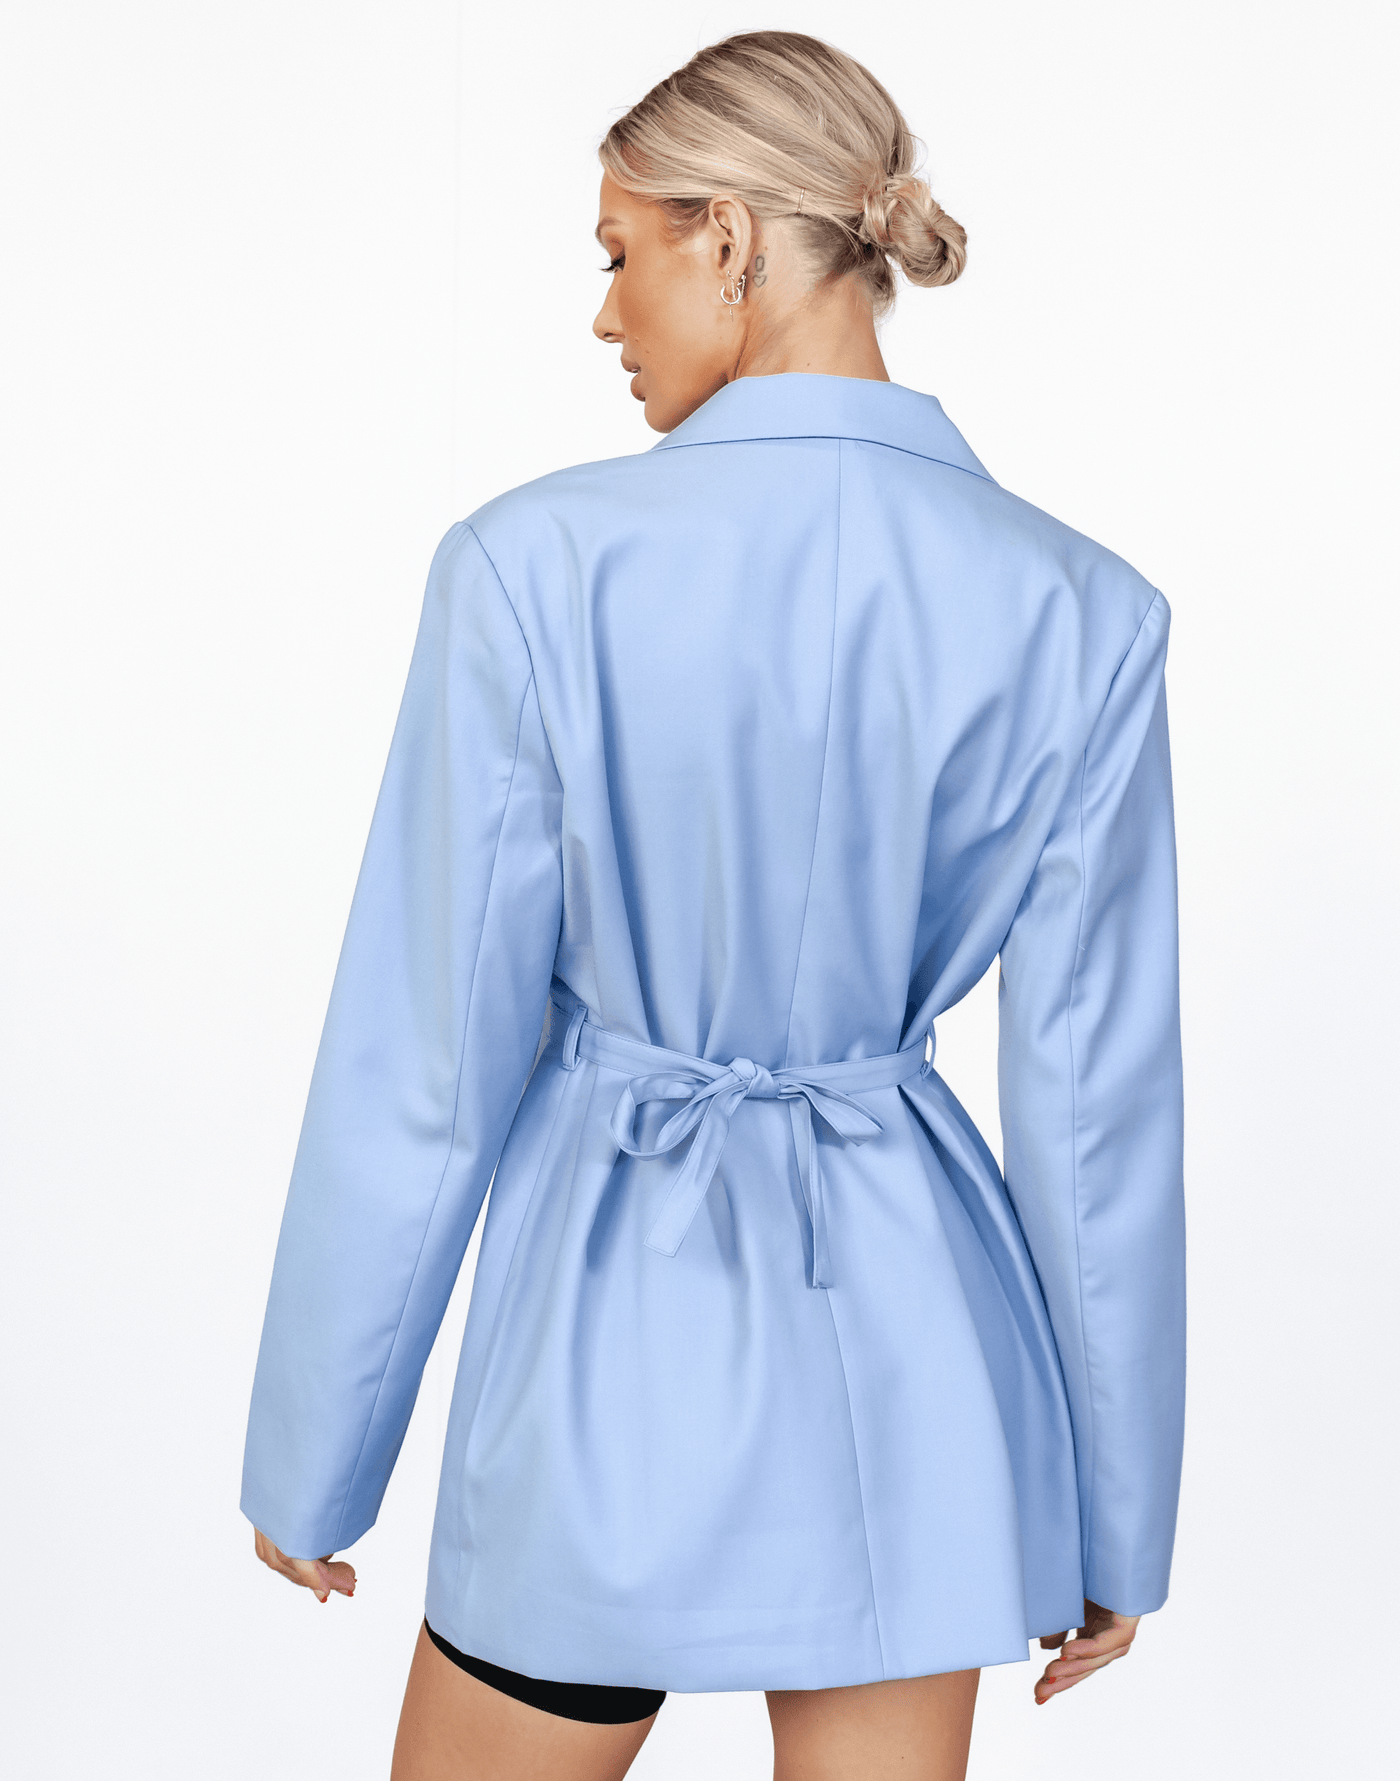 Olympia Blazer Dress (Blue) - Mini Length Jacket Dress - Women's Dress - Charcoal Clothing